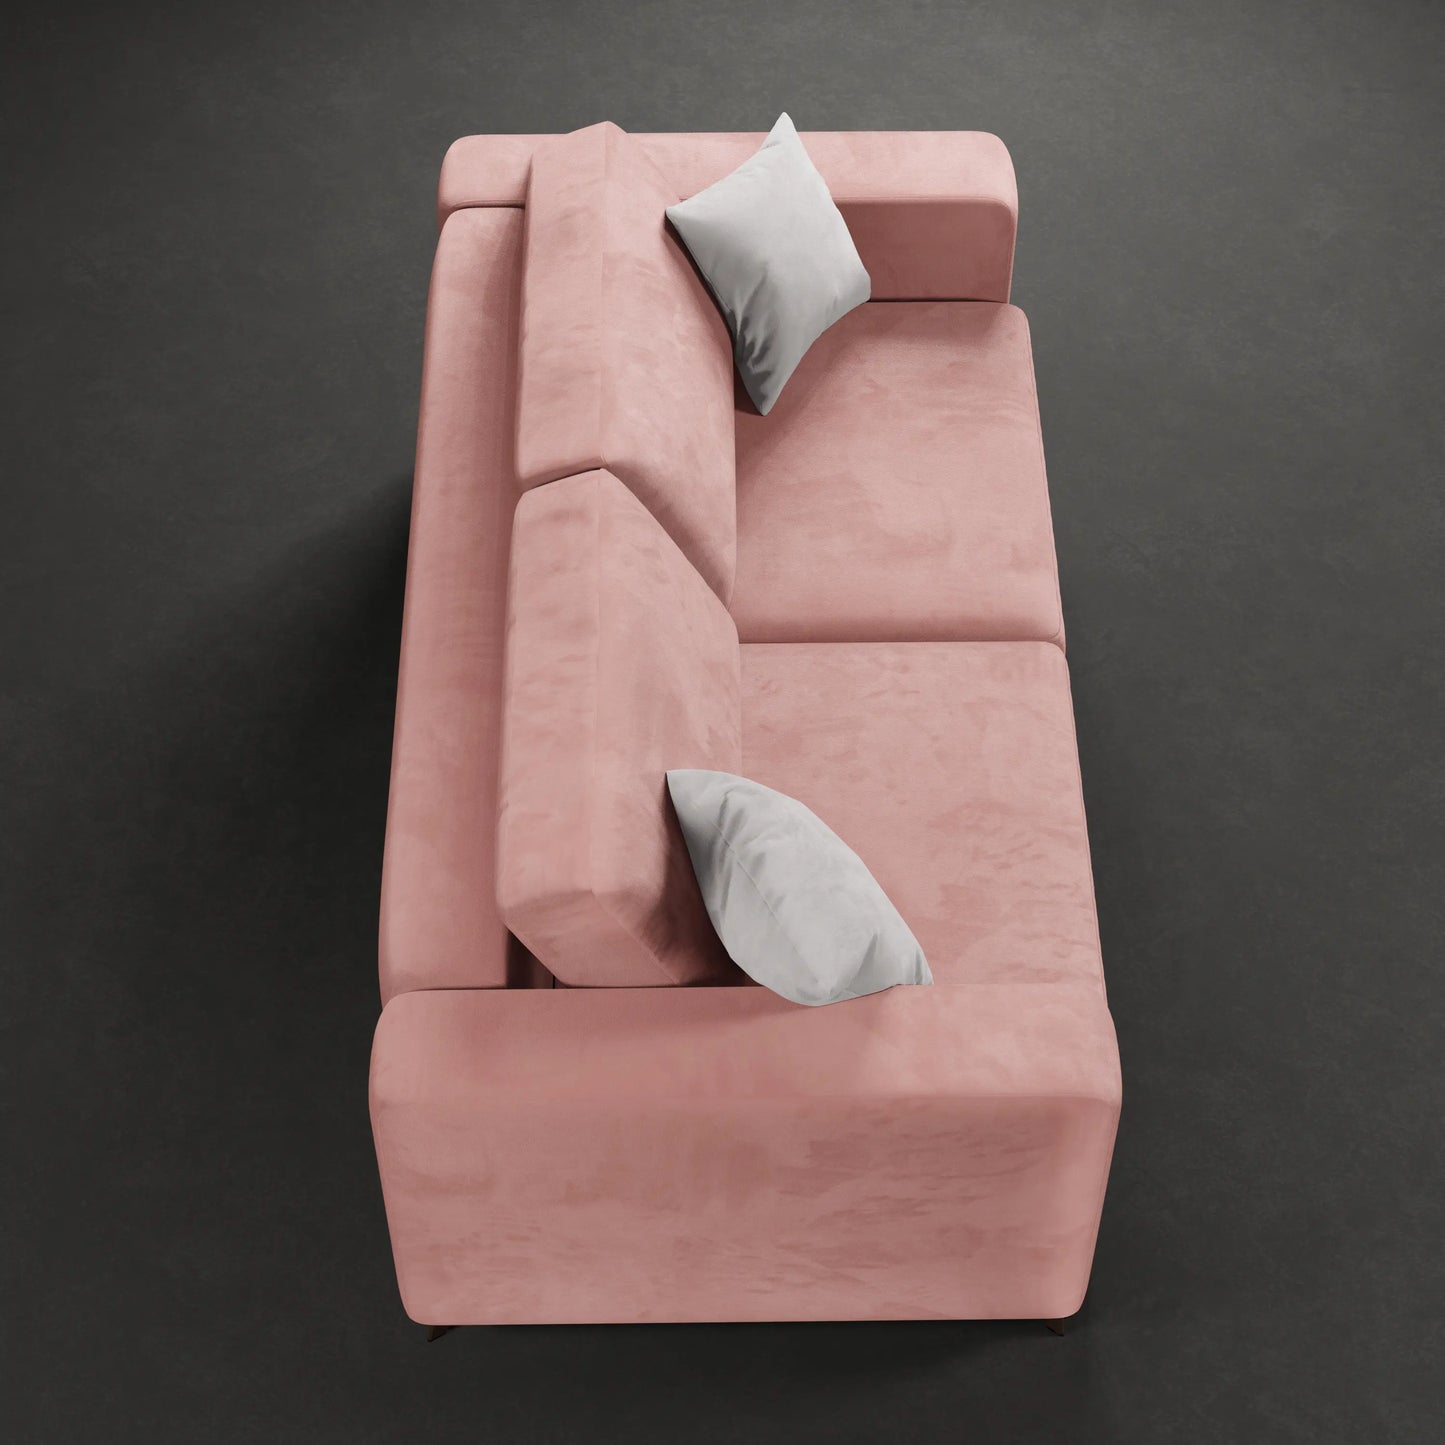 JUNIPER - 2 Seater Couch in Velvet Finish | Pink colour